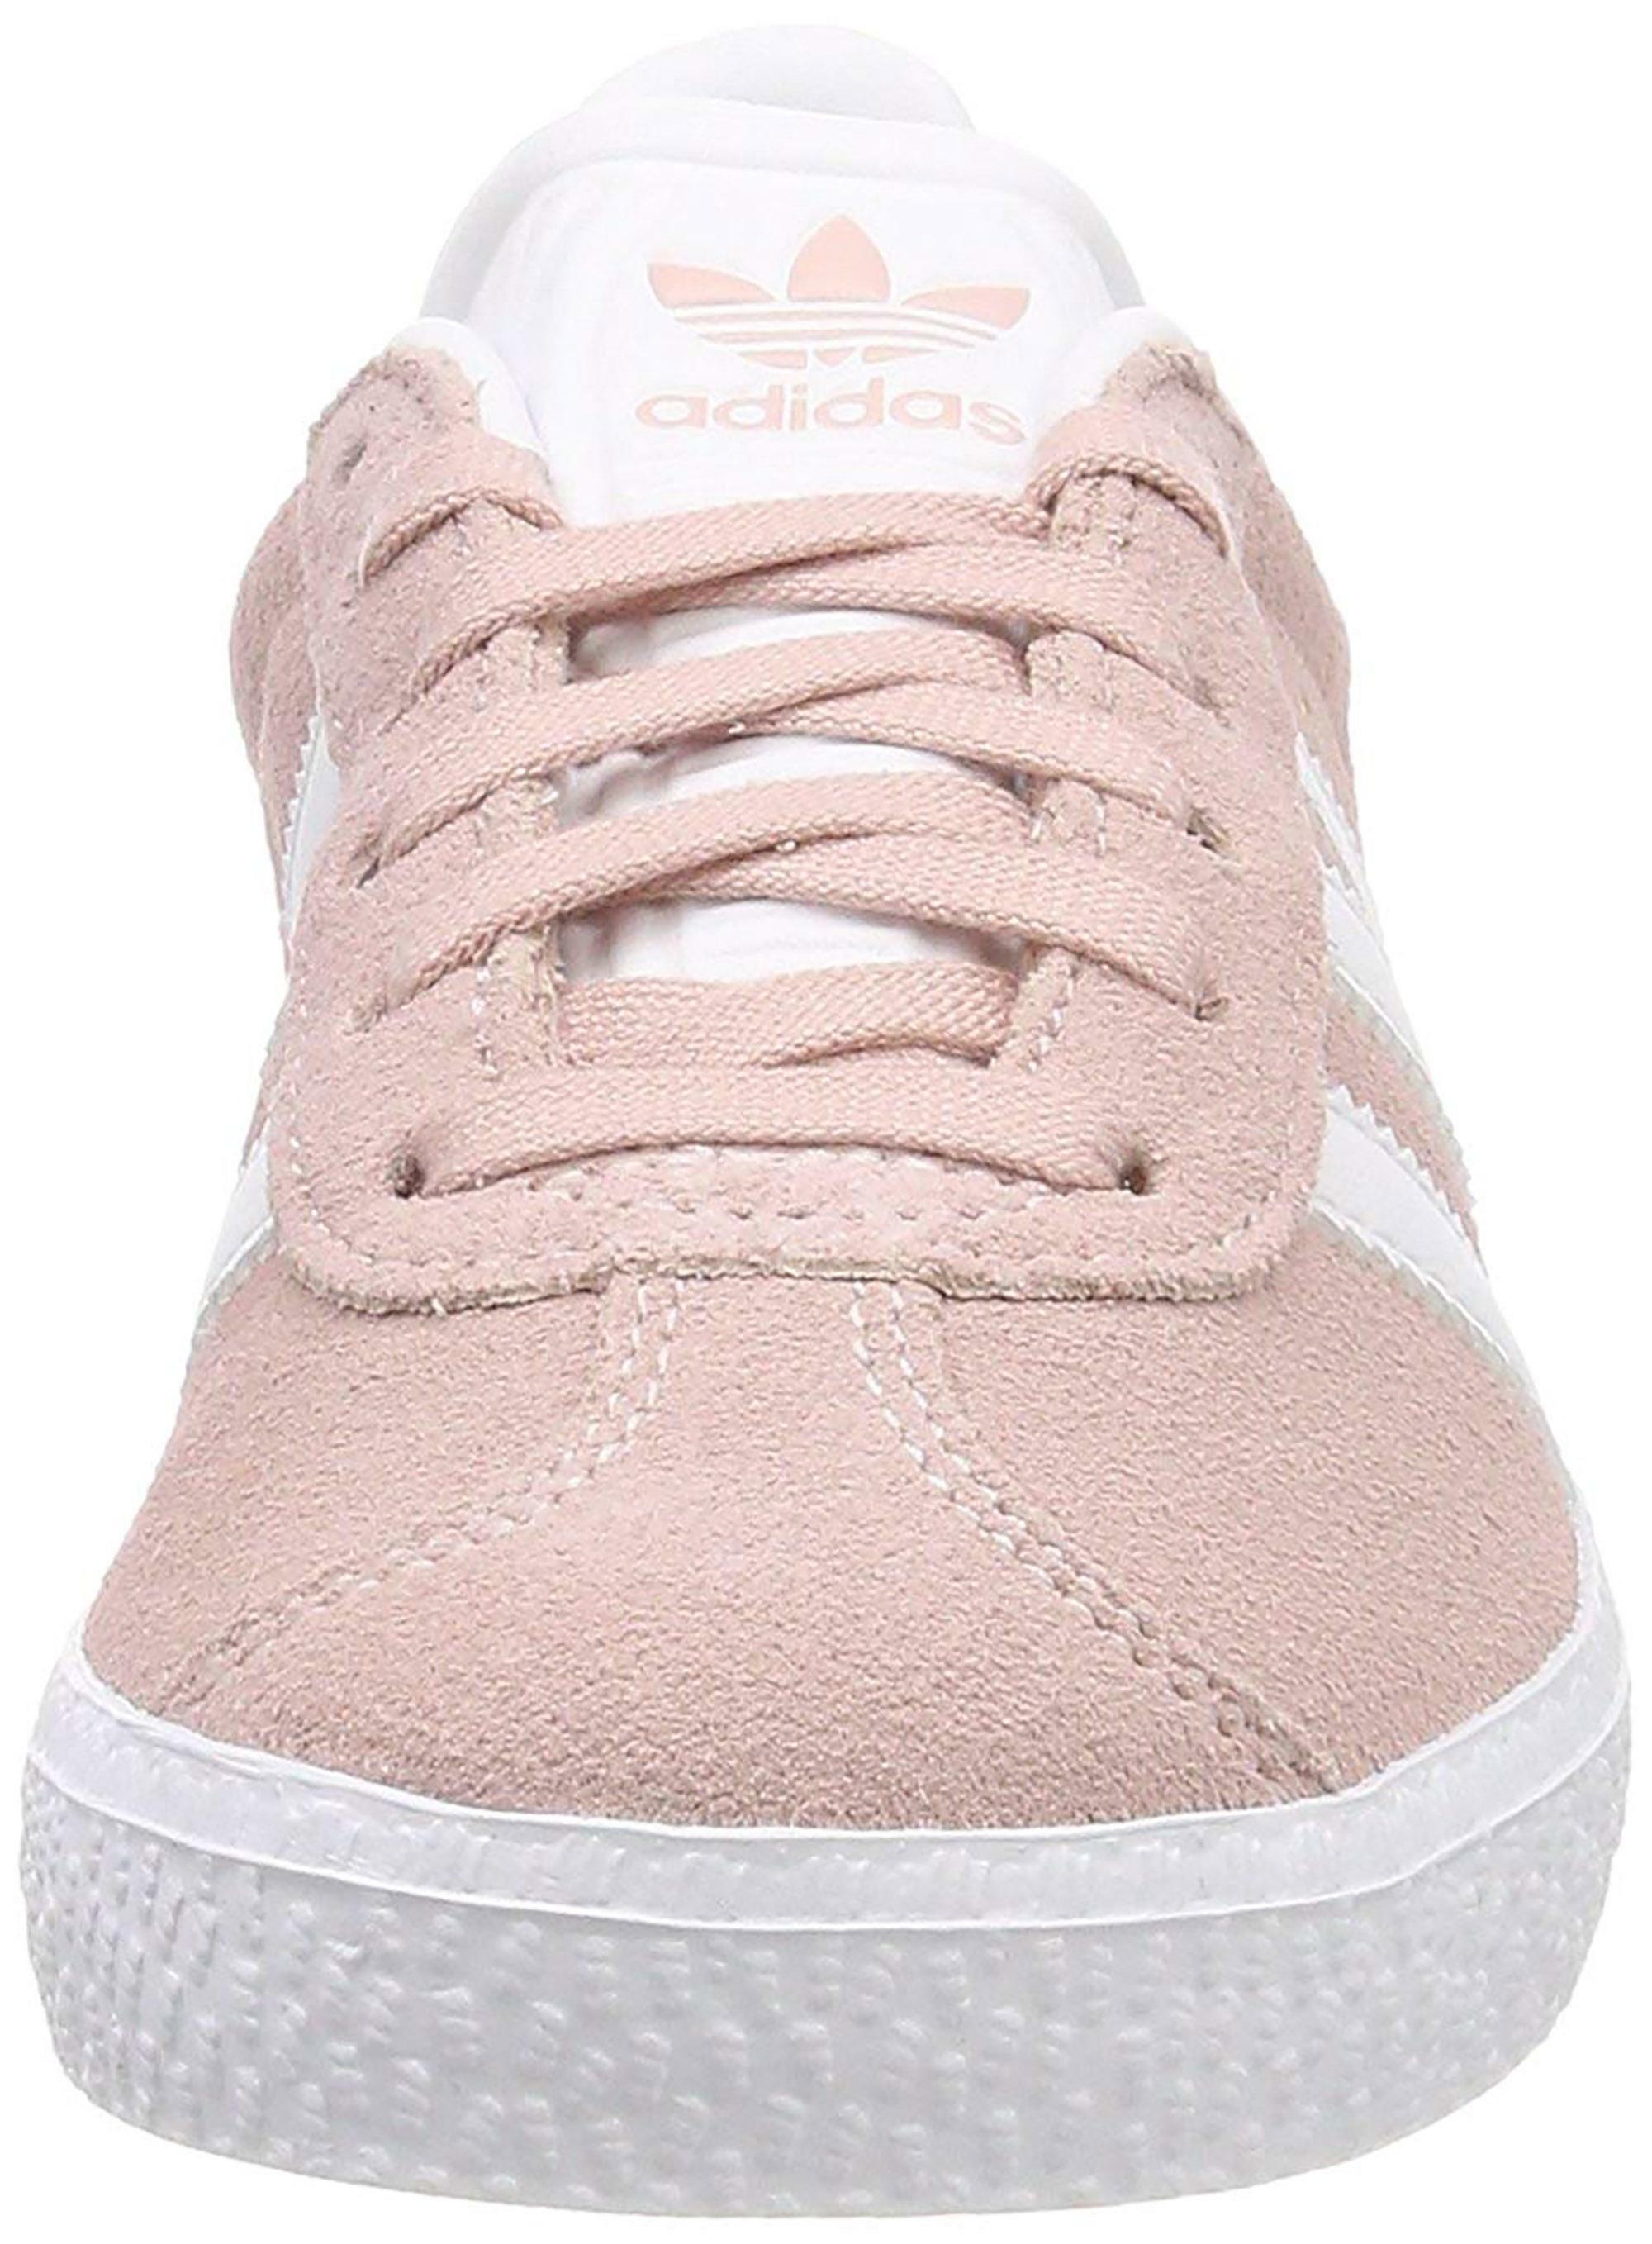 adidas originals adidas gazelle j scarpe sportive donna rosa by9544